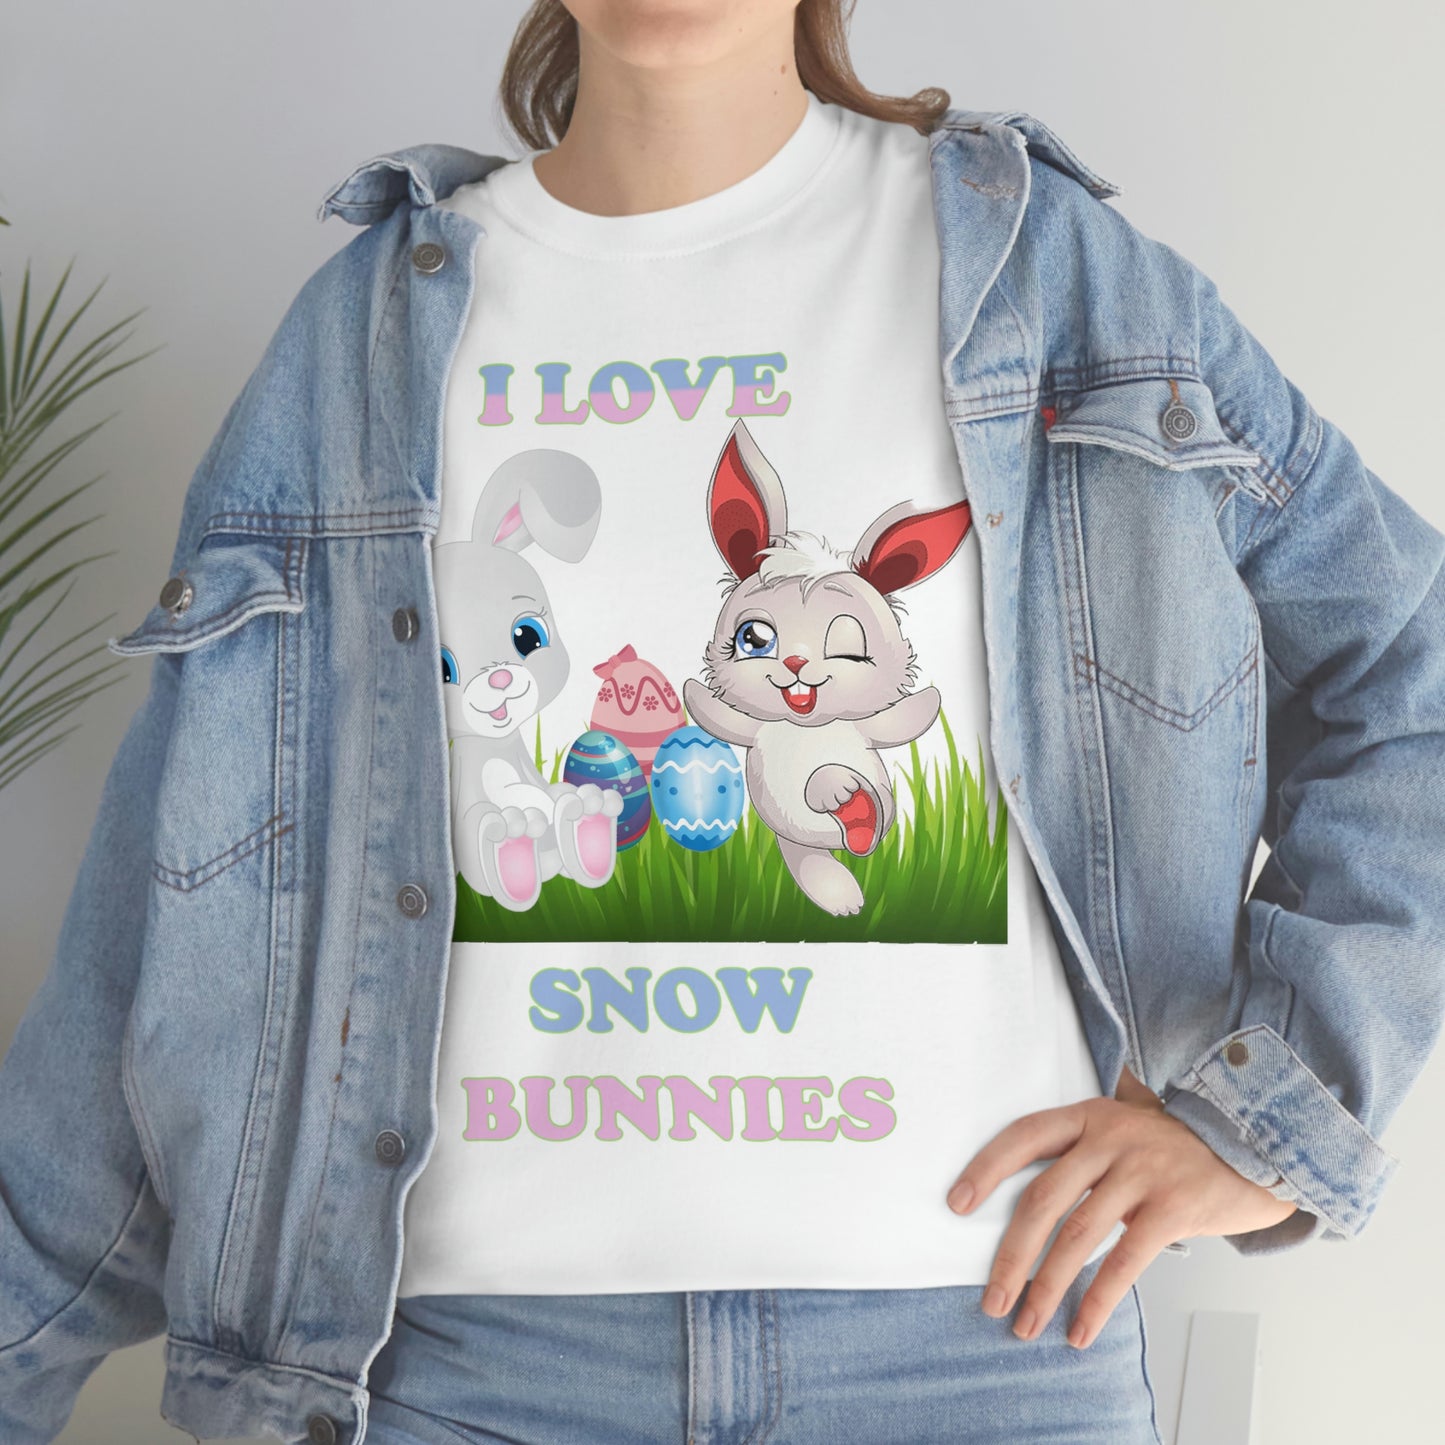 Snow bunnies Tee